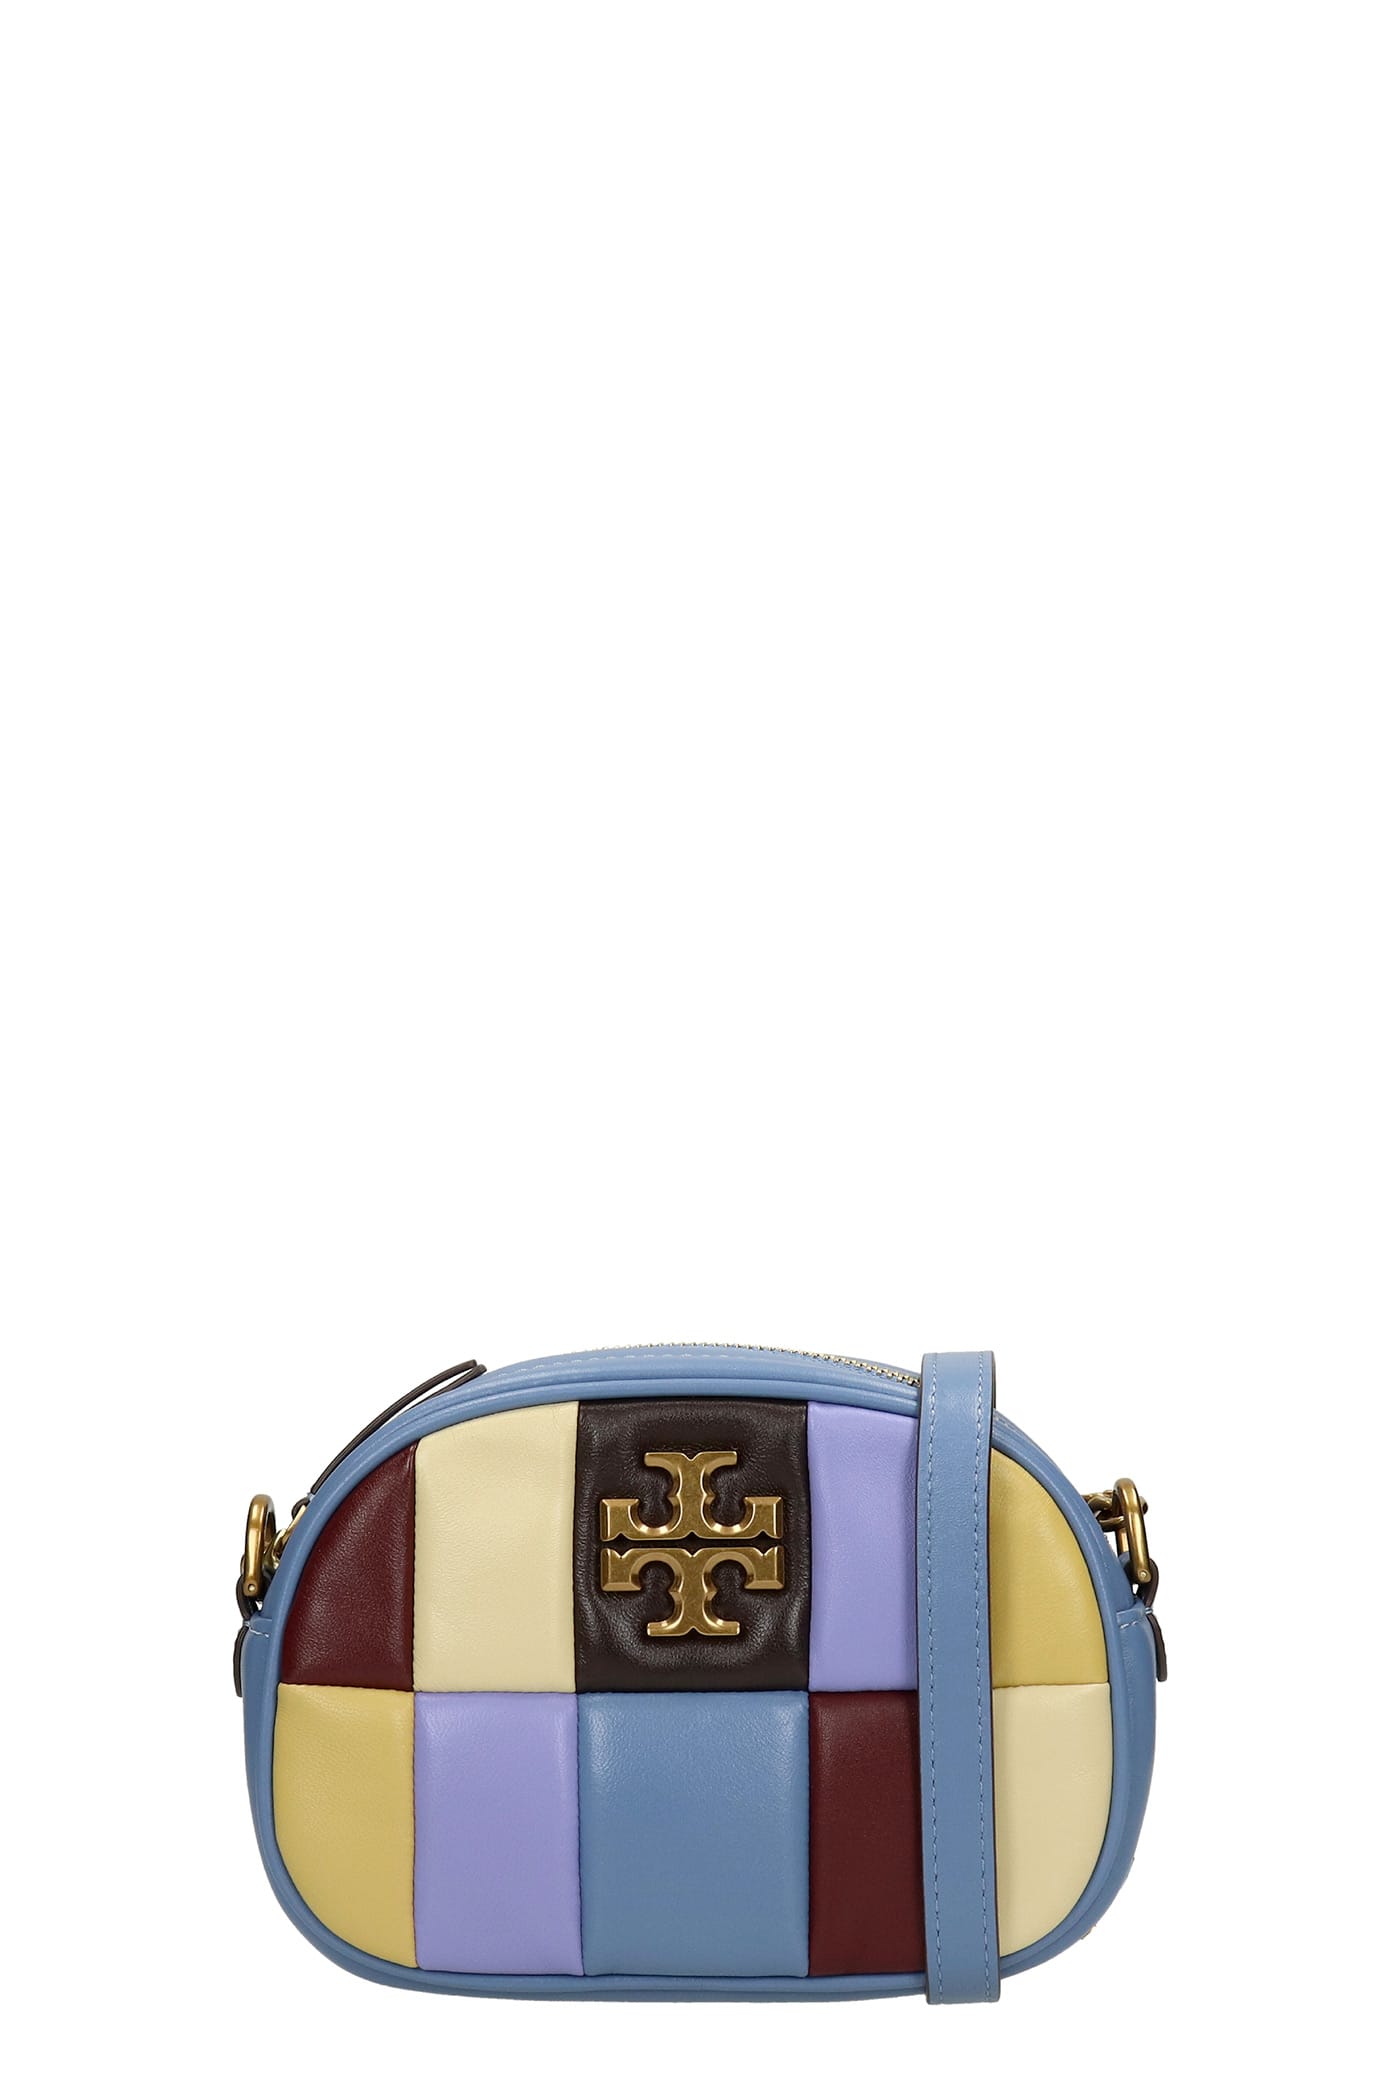 Tory Burch Kira Patchwork Shoulder Bag In Multicolor Leather